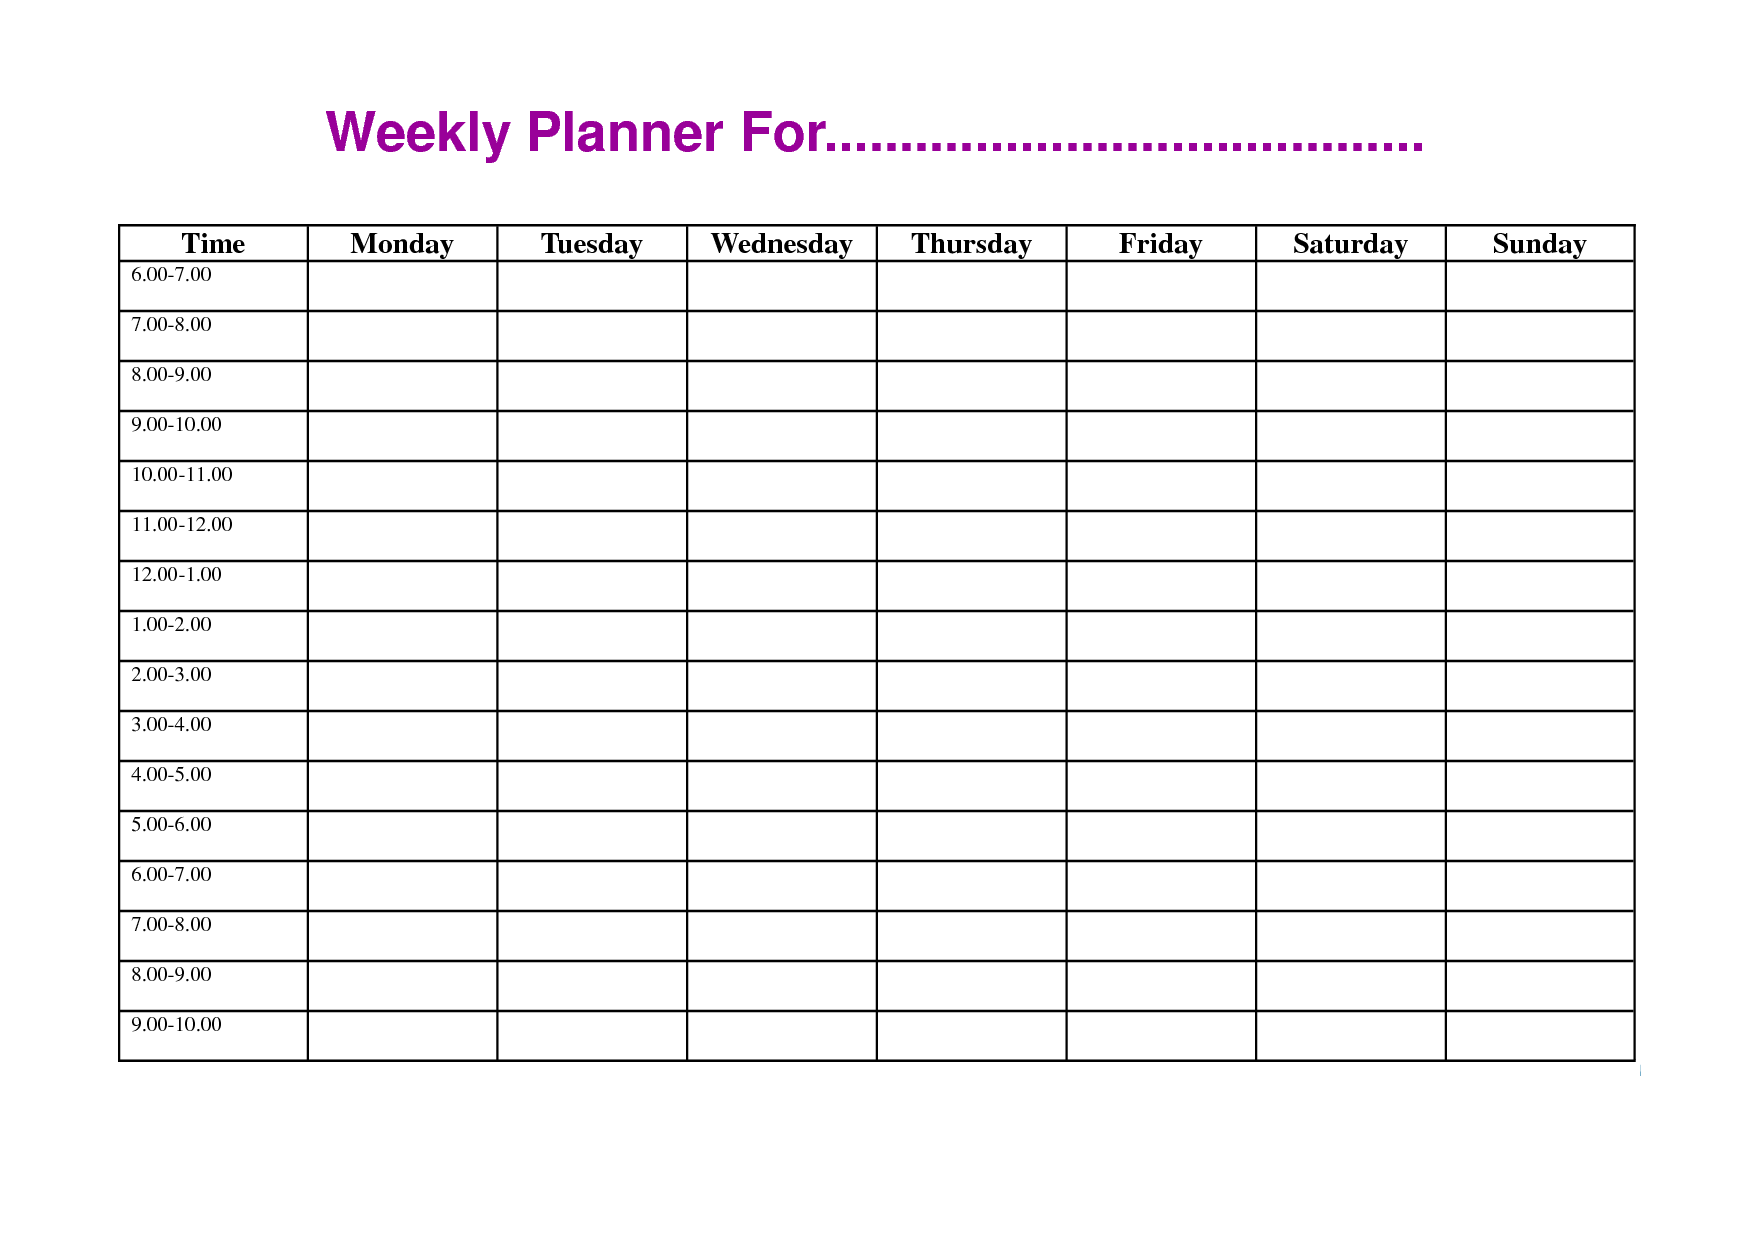 weekly schedule template weekly work schedule template